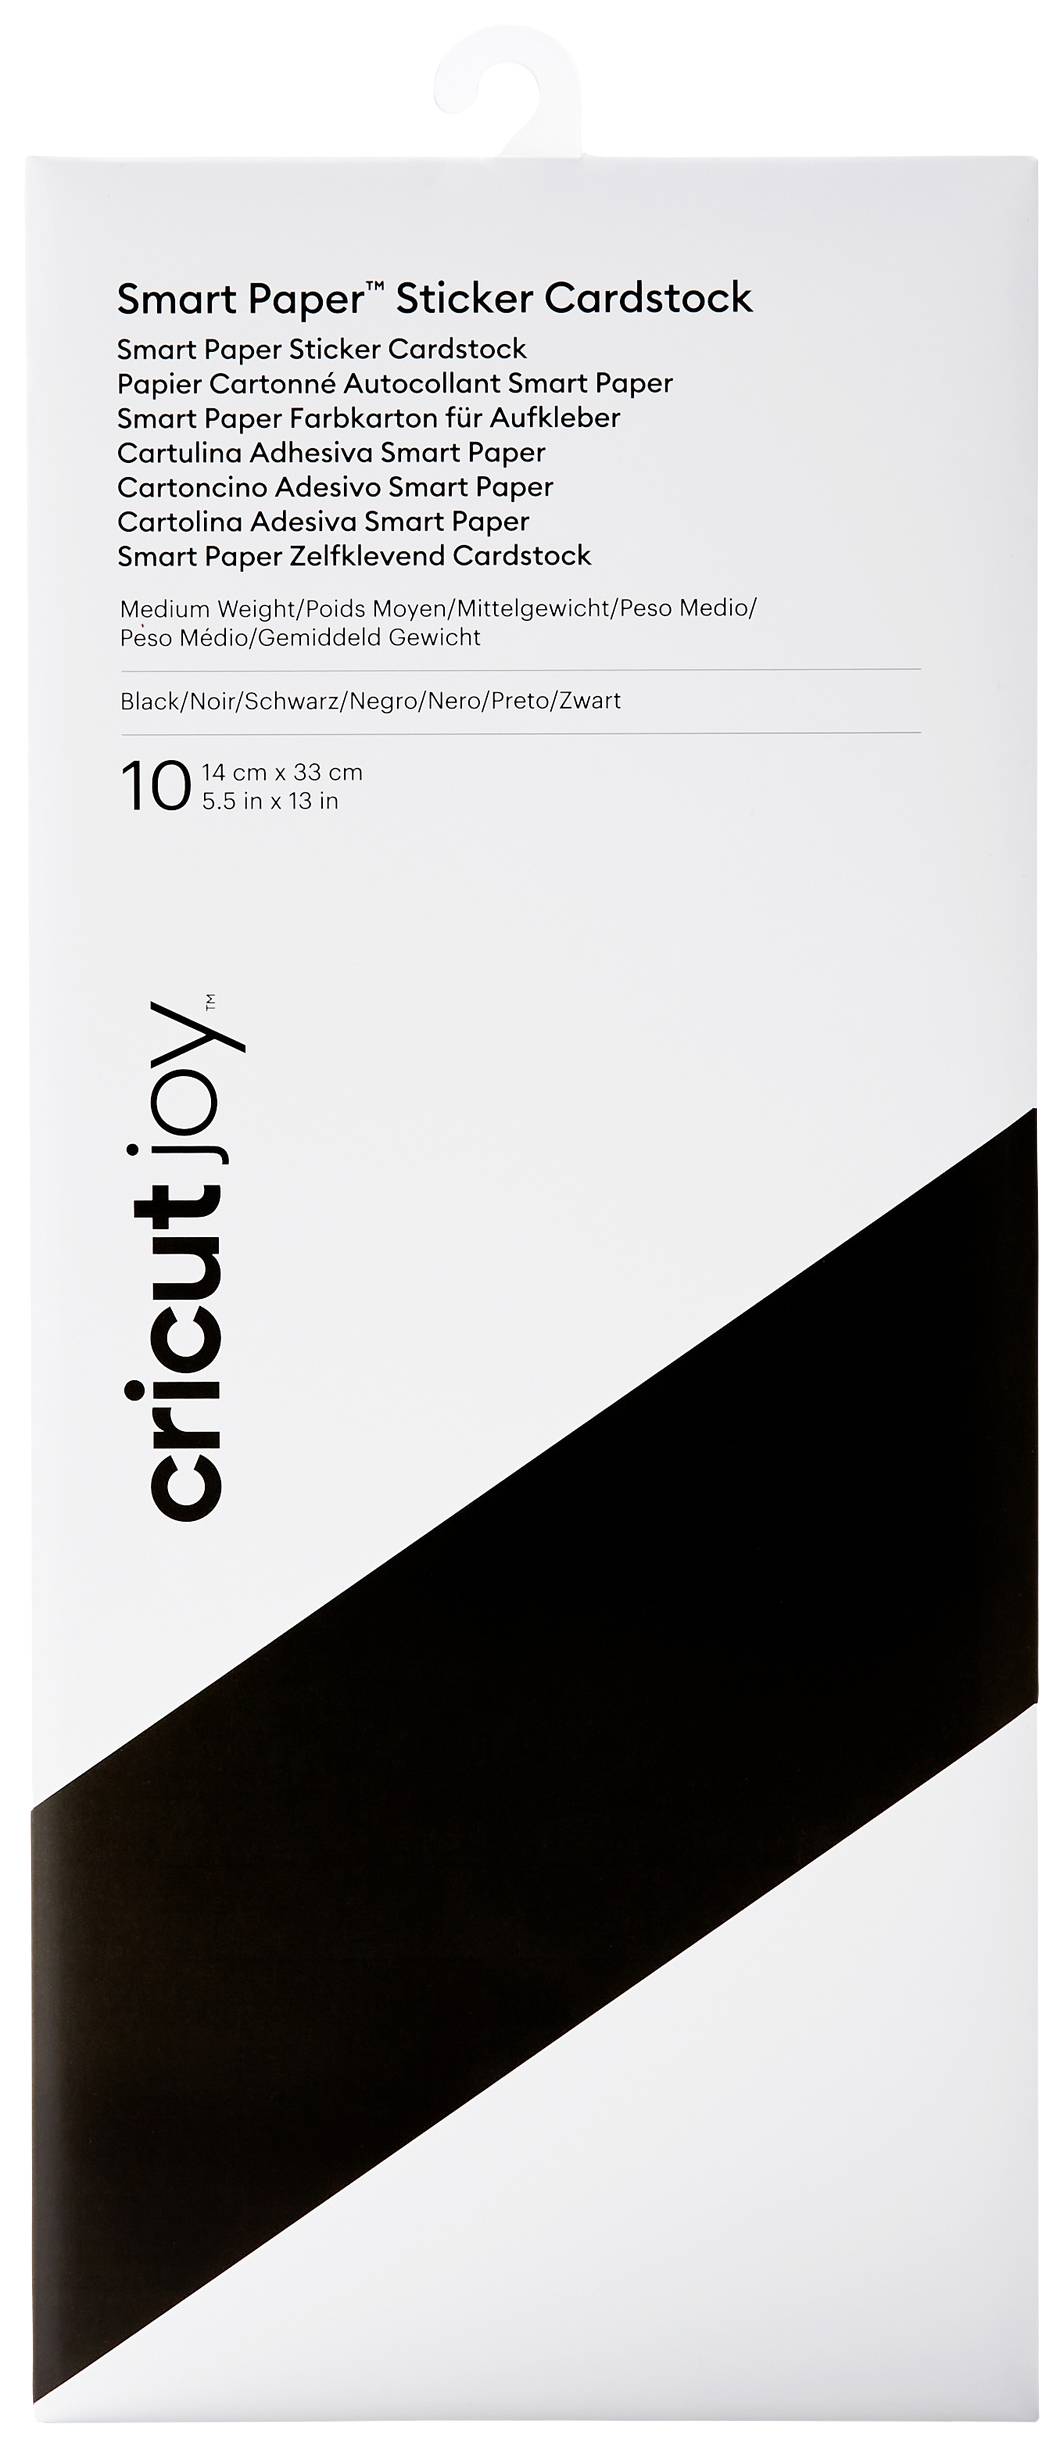 Cricut Joy Smart Paper Sticker Cardstock in Black